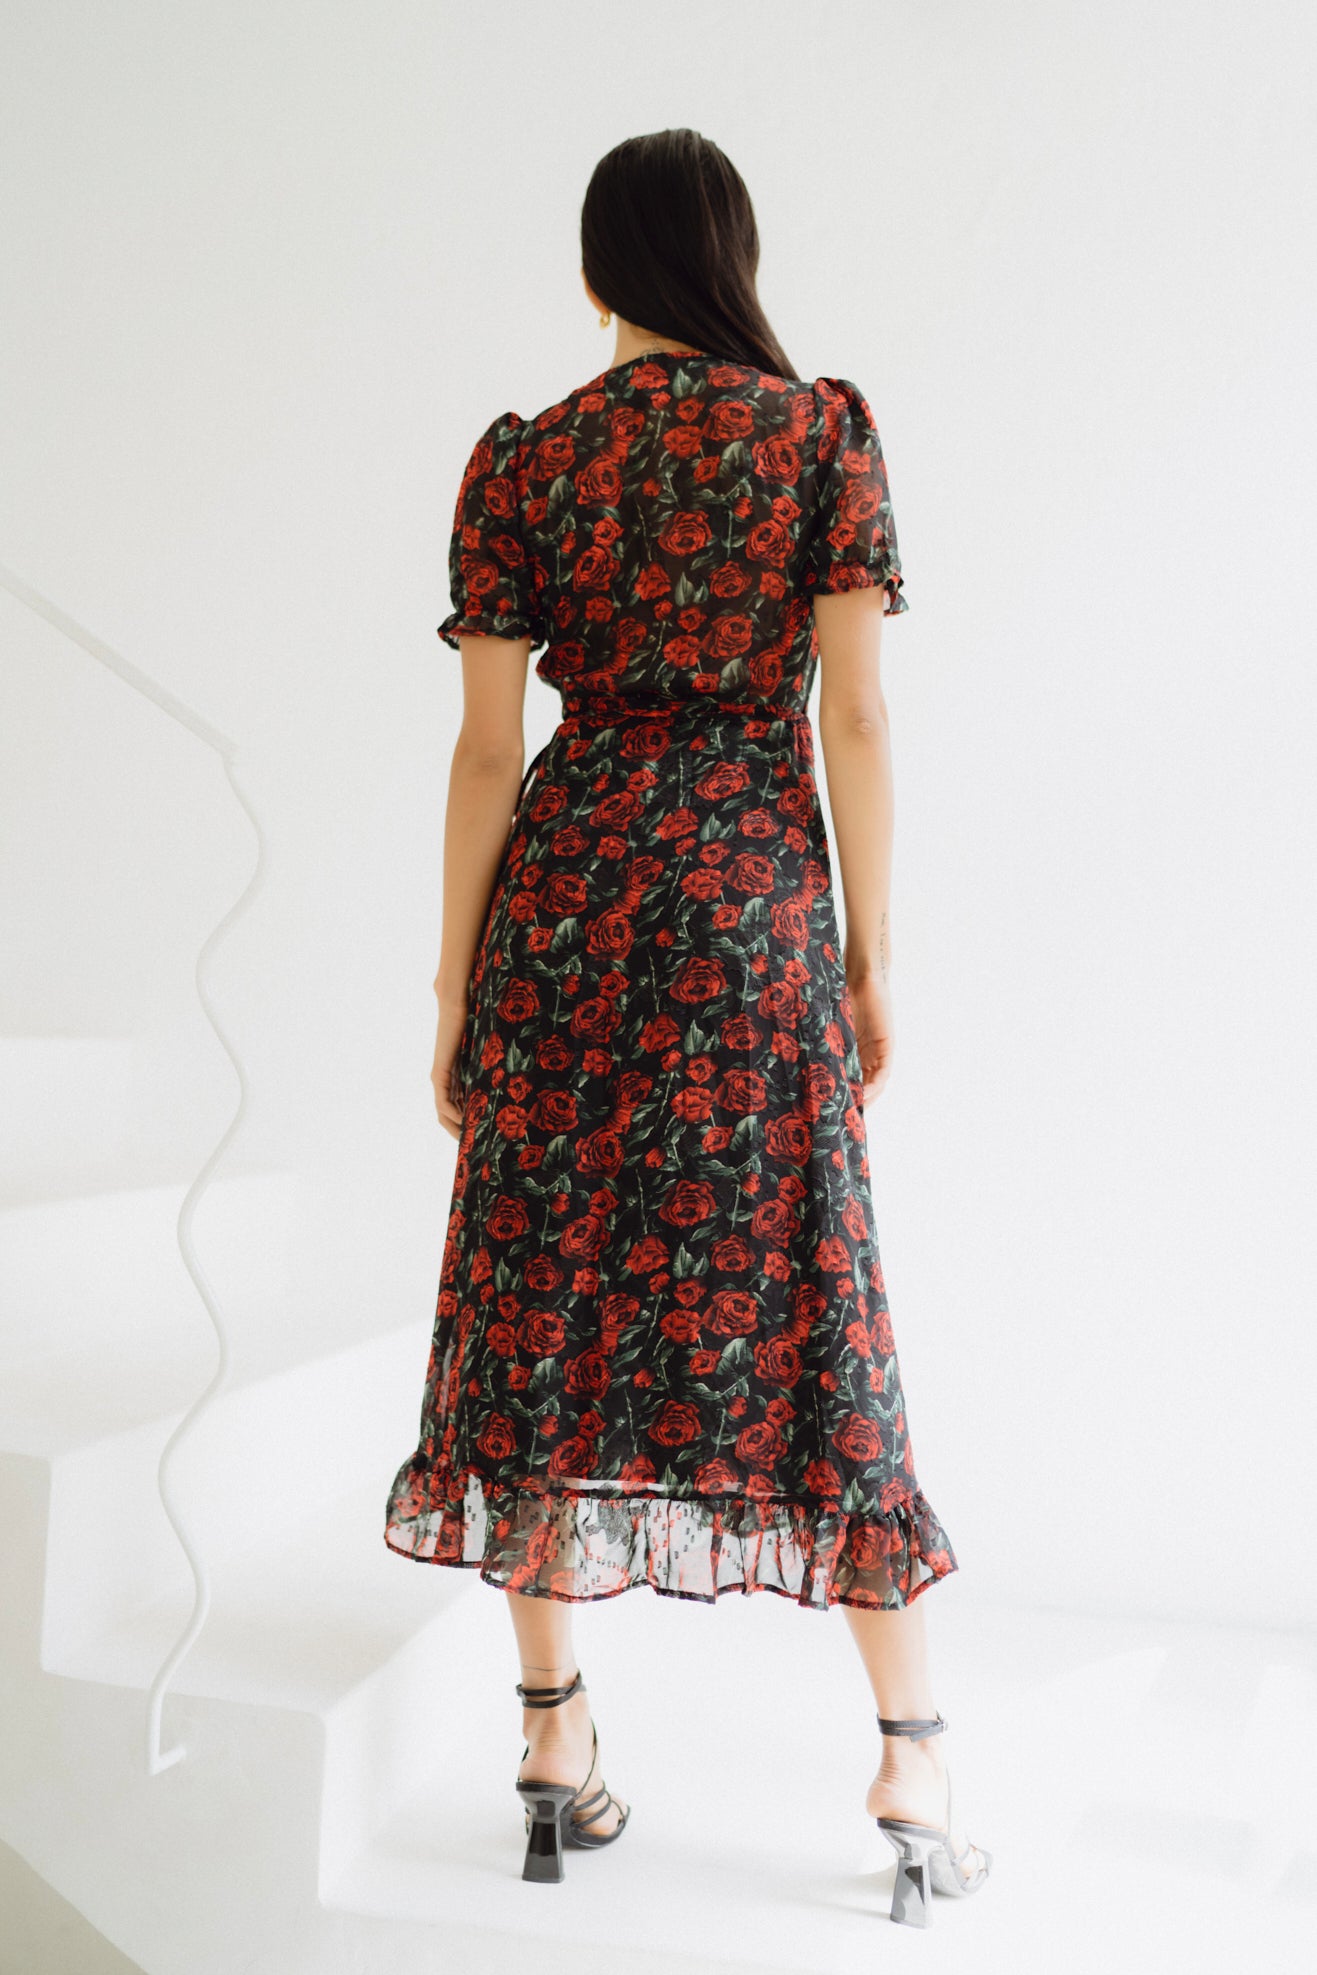 Evelyn Black Red Floral Wrap Midi Dress